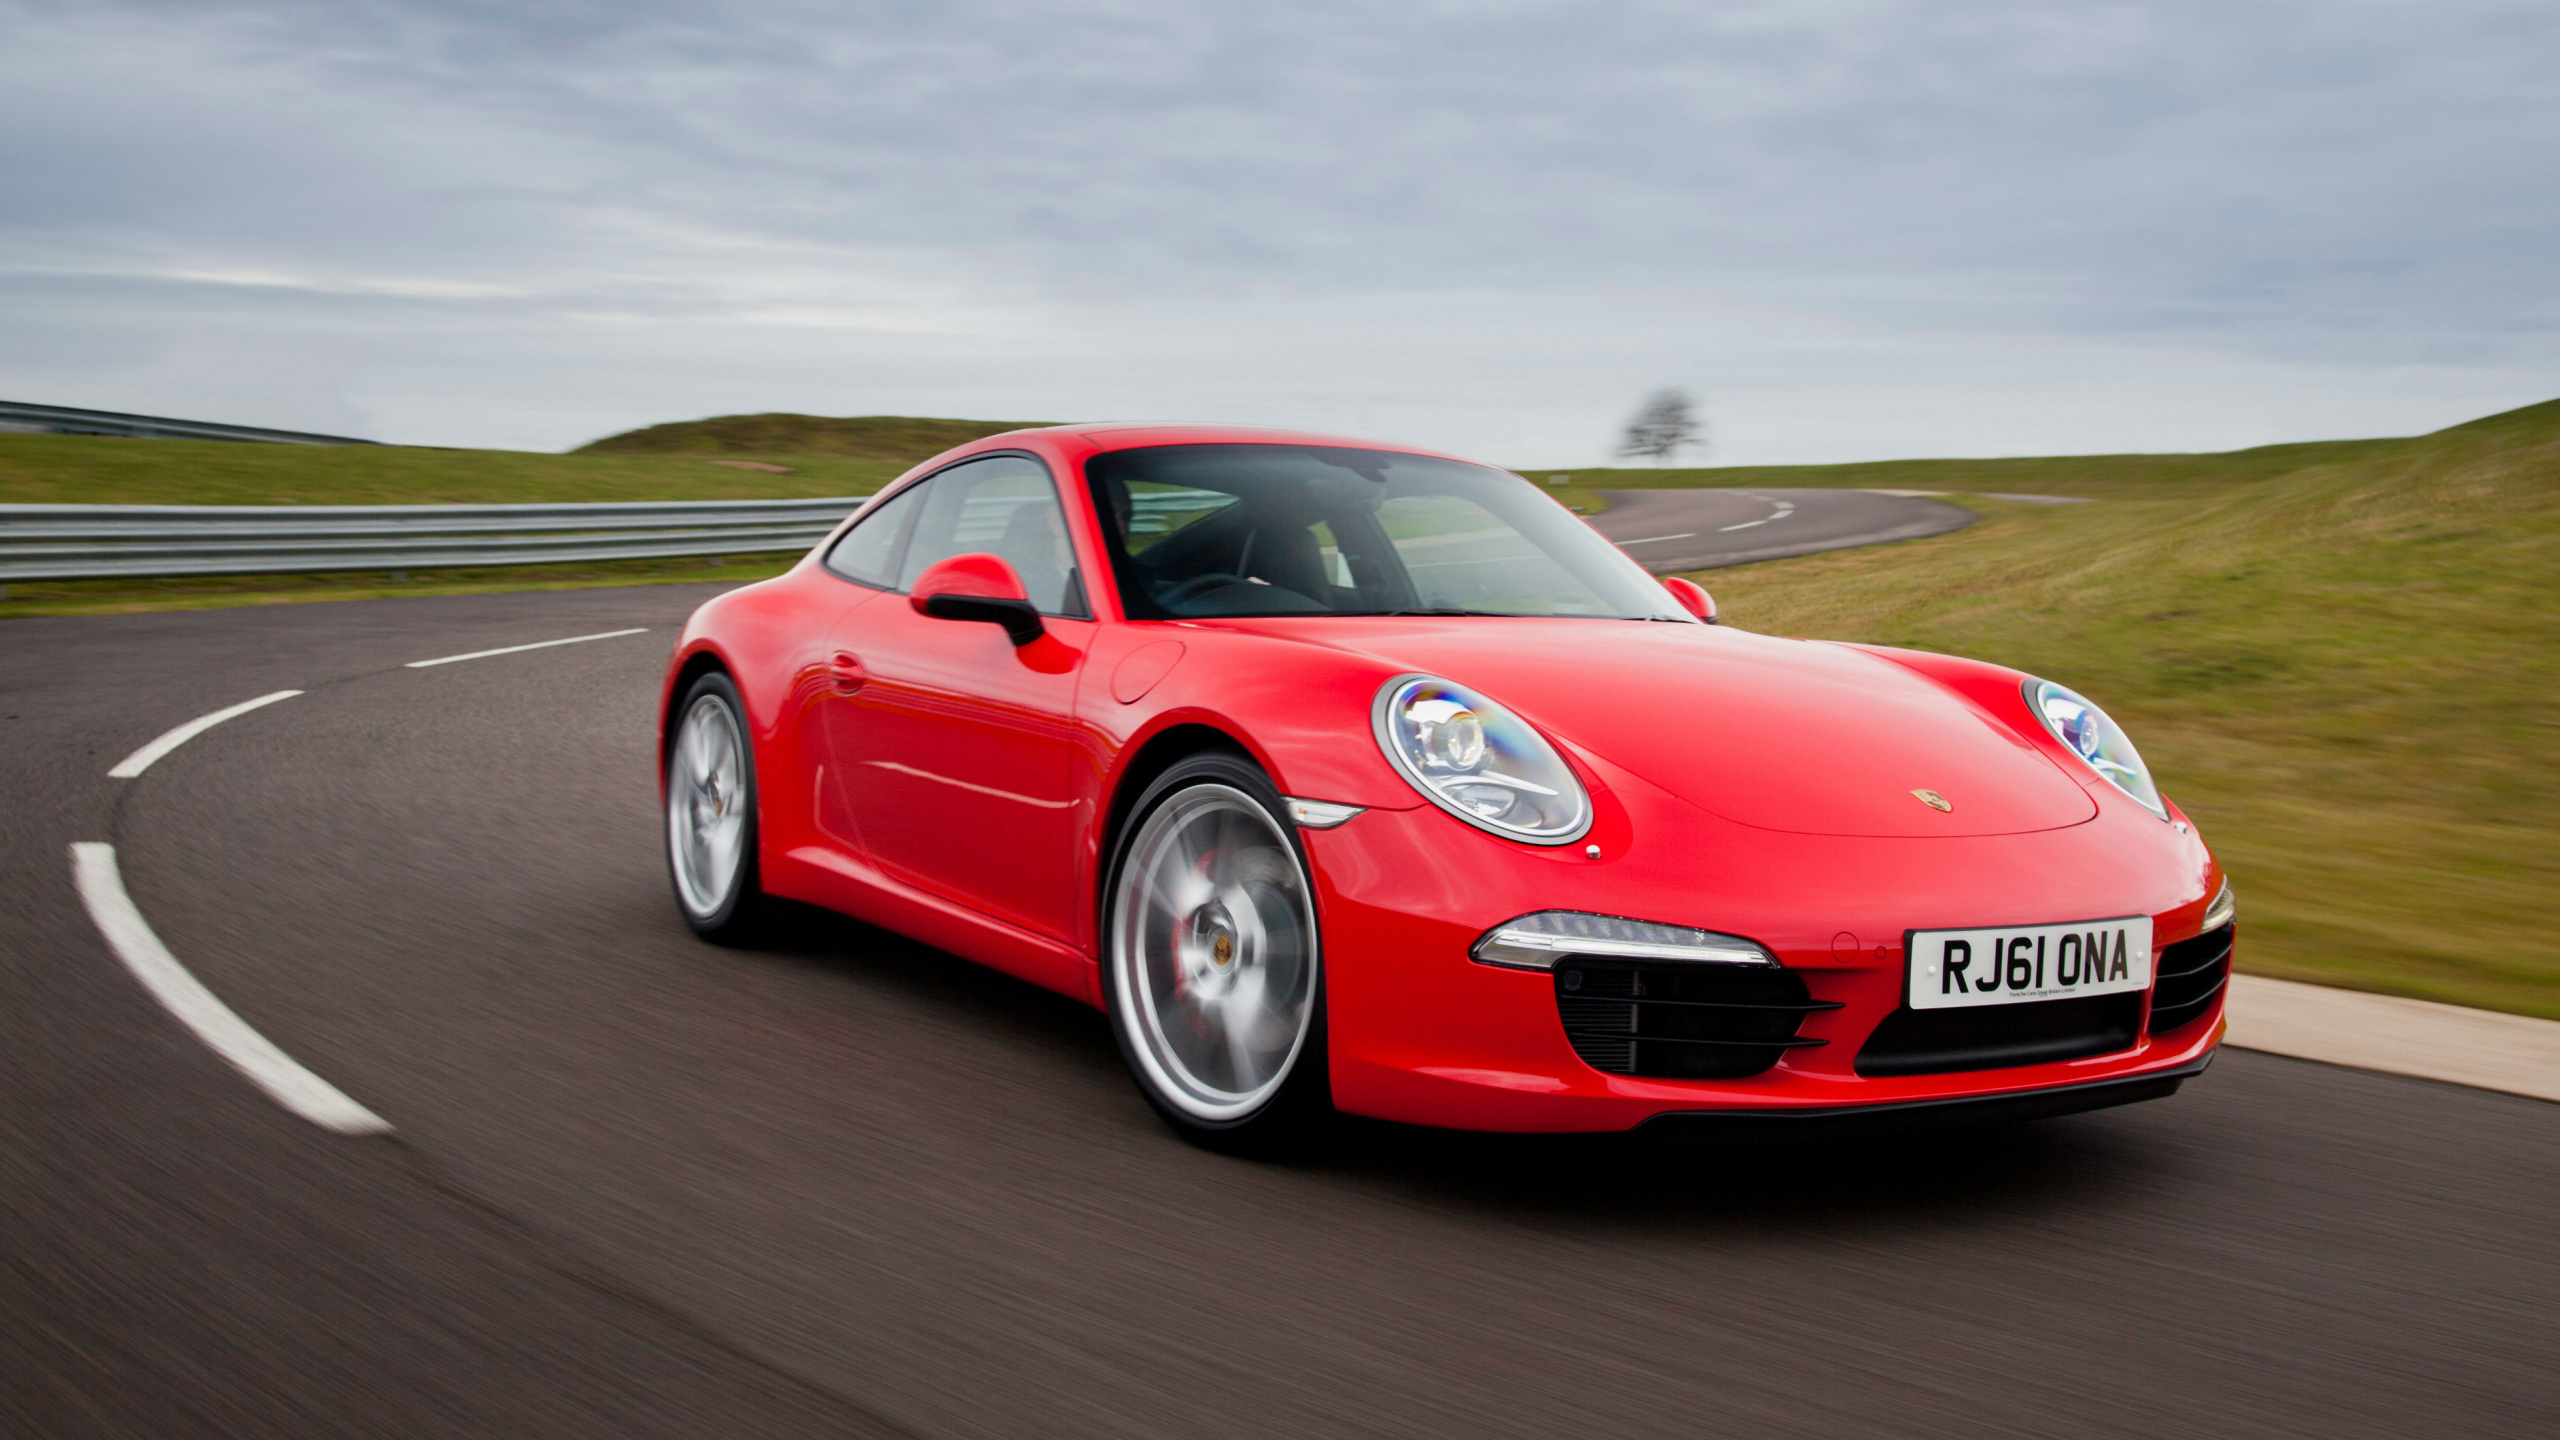 Red Porsche 911 on Road During Daytime. Wallpaper in 2560x1440 Resolution